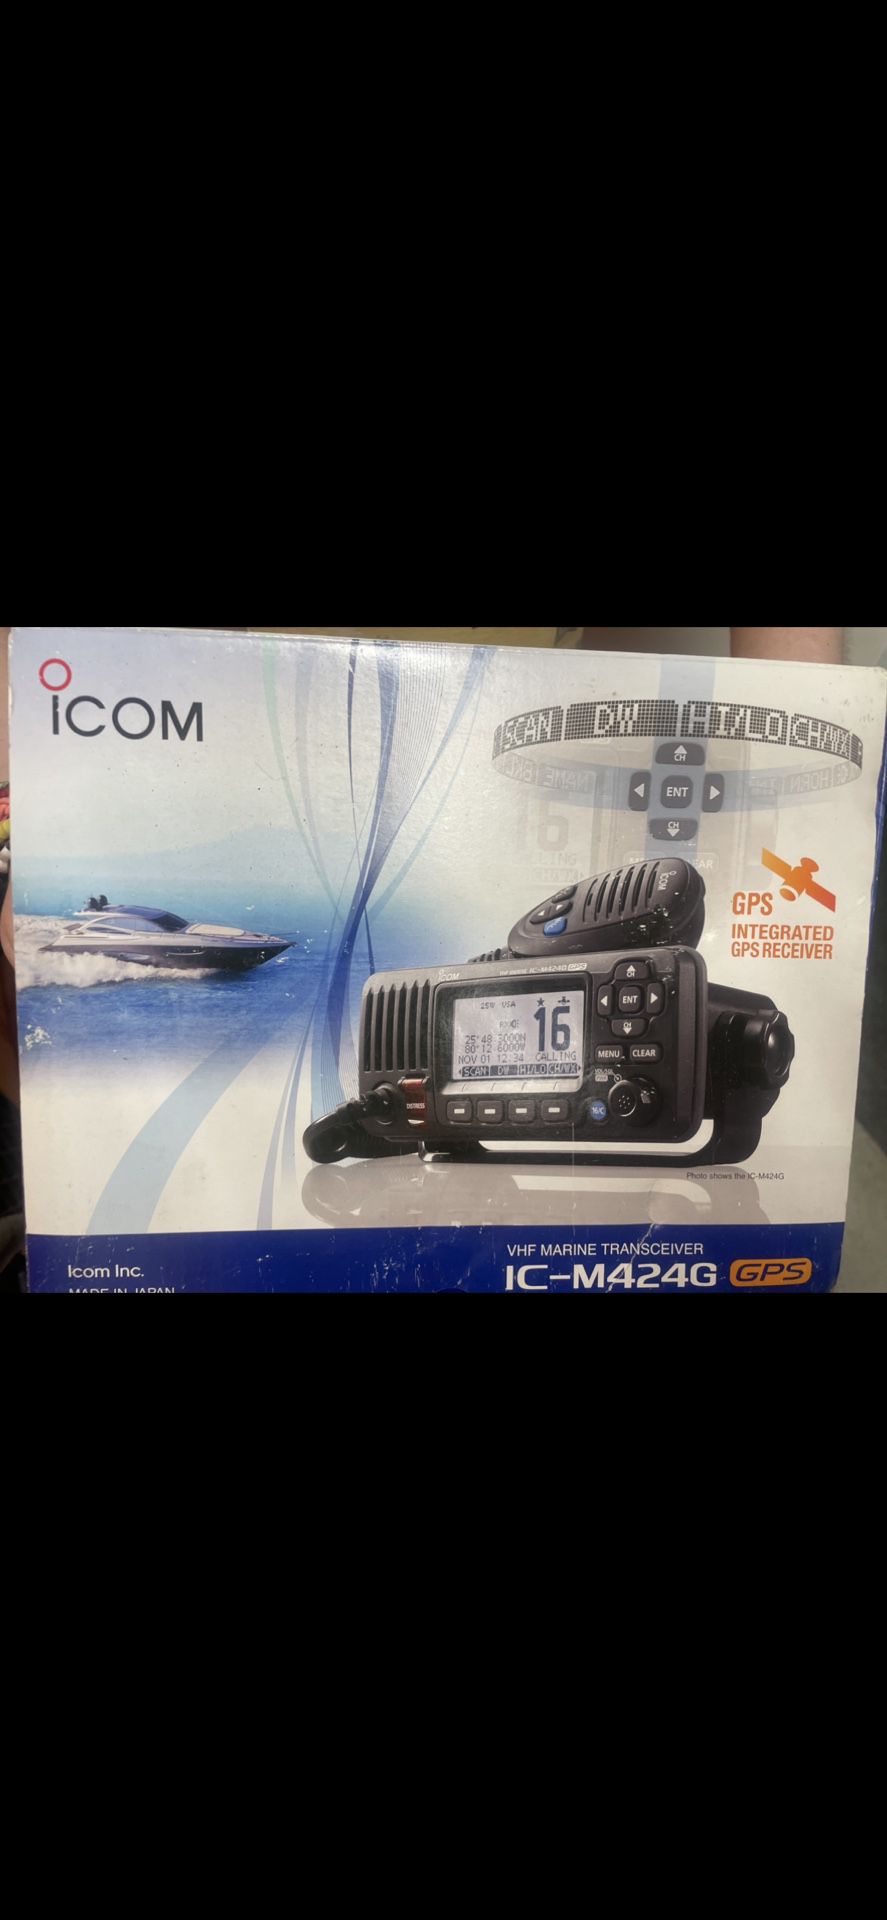 $210. ICOM M424G Fixed-Mount VHF Radio with GPS Receiver $210